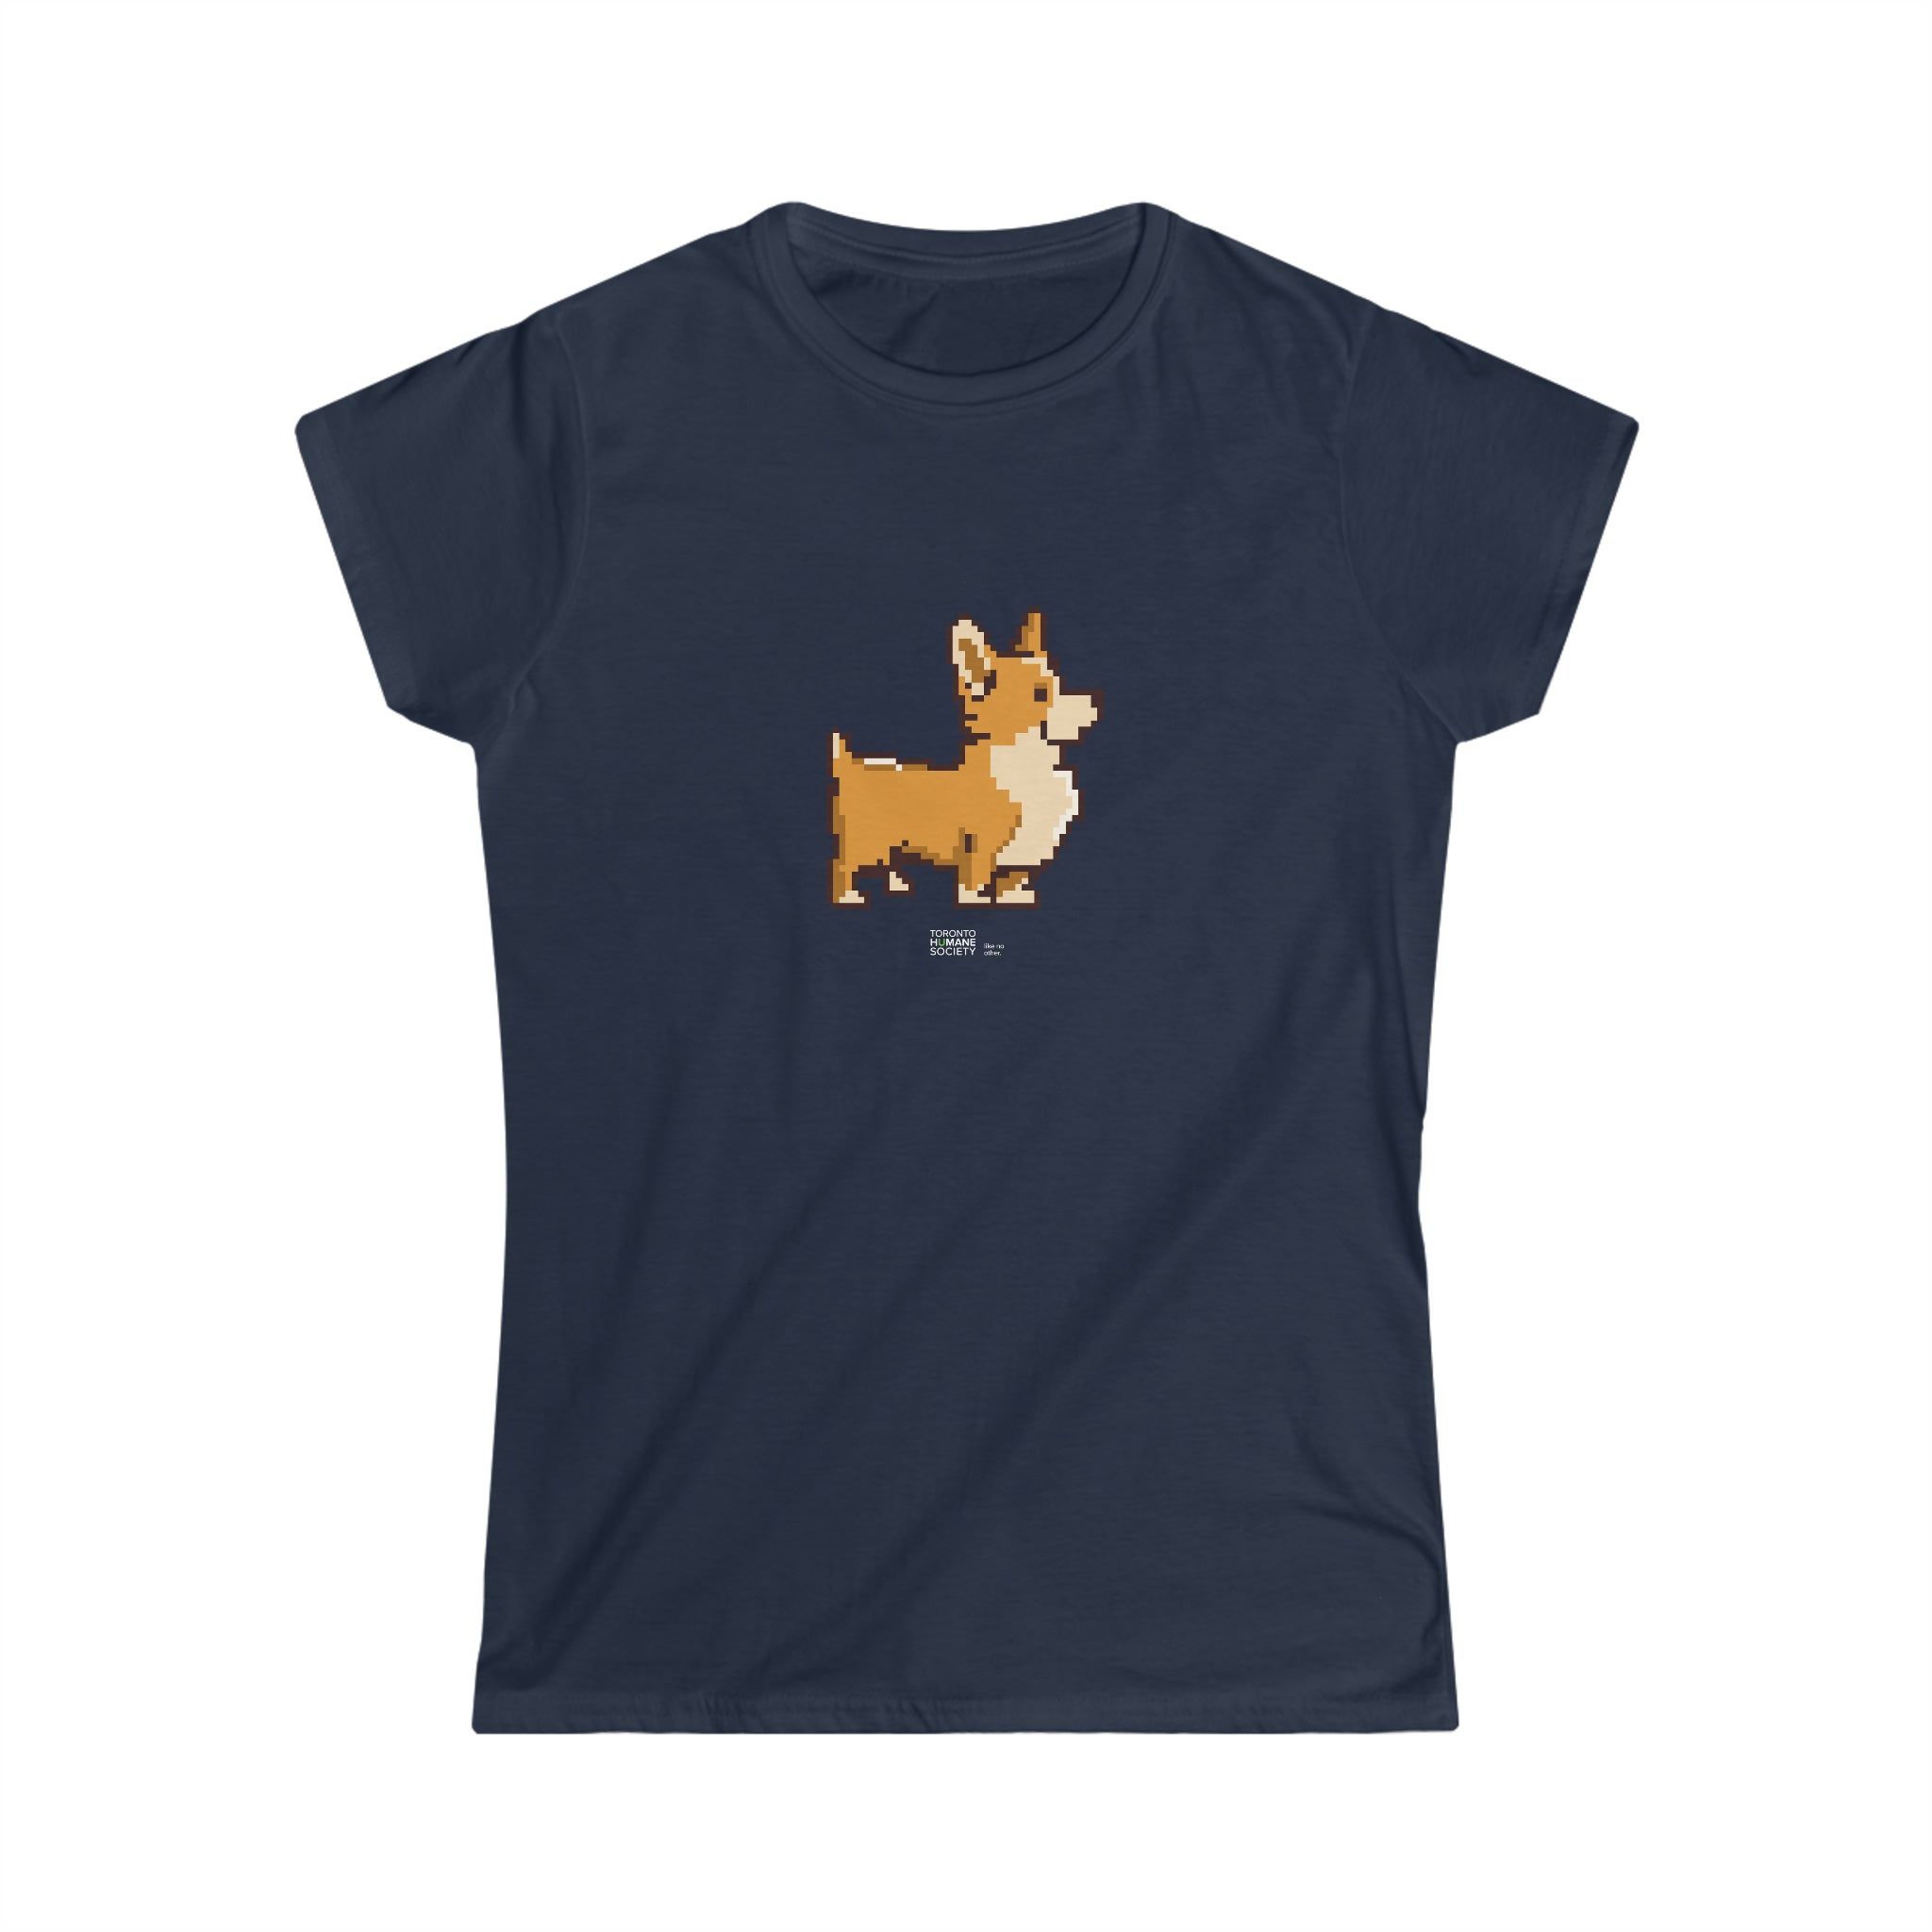 Women's Softstyle Tee - Pixelated Dog